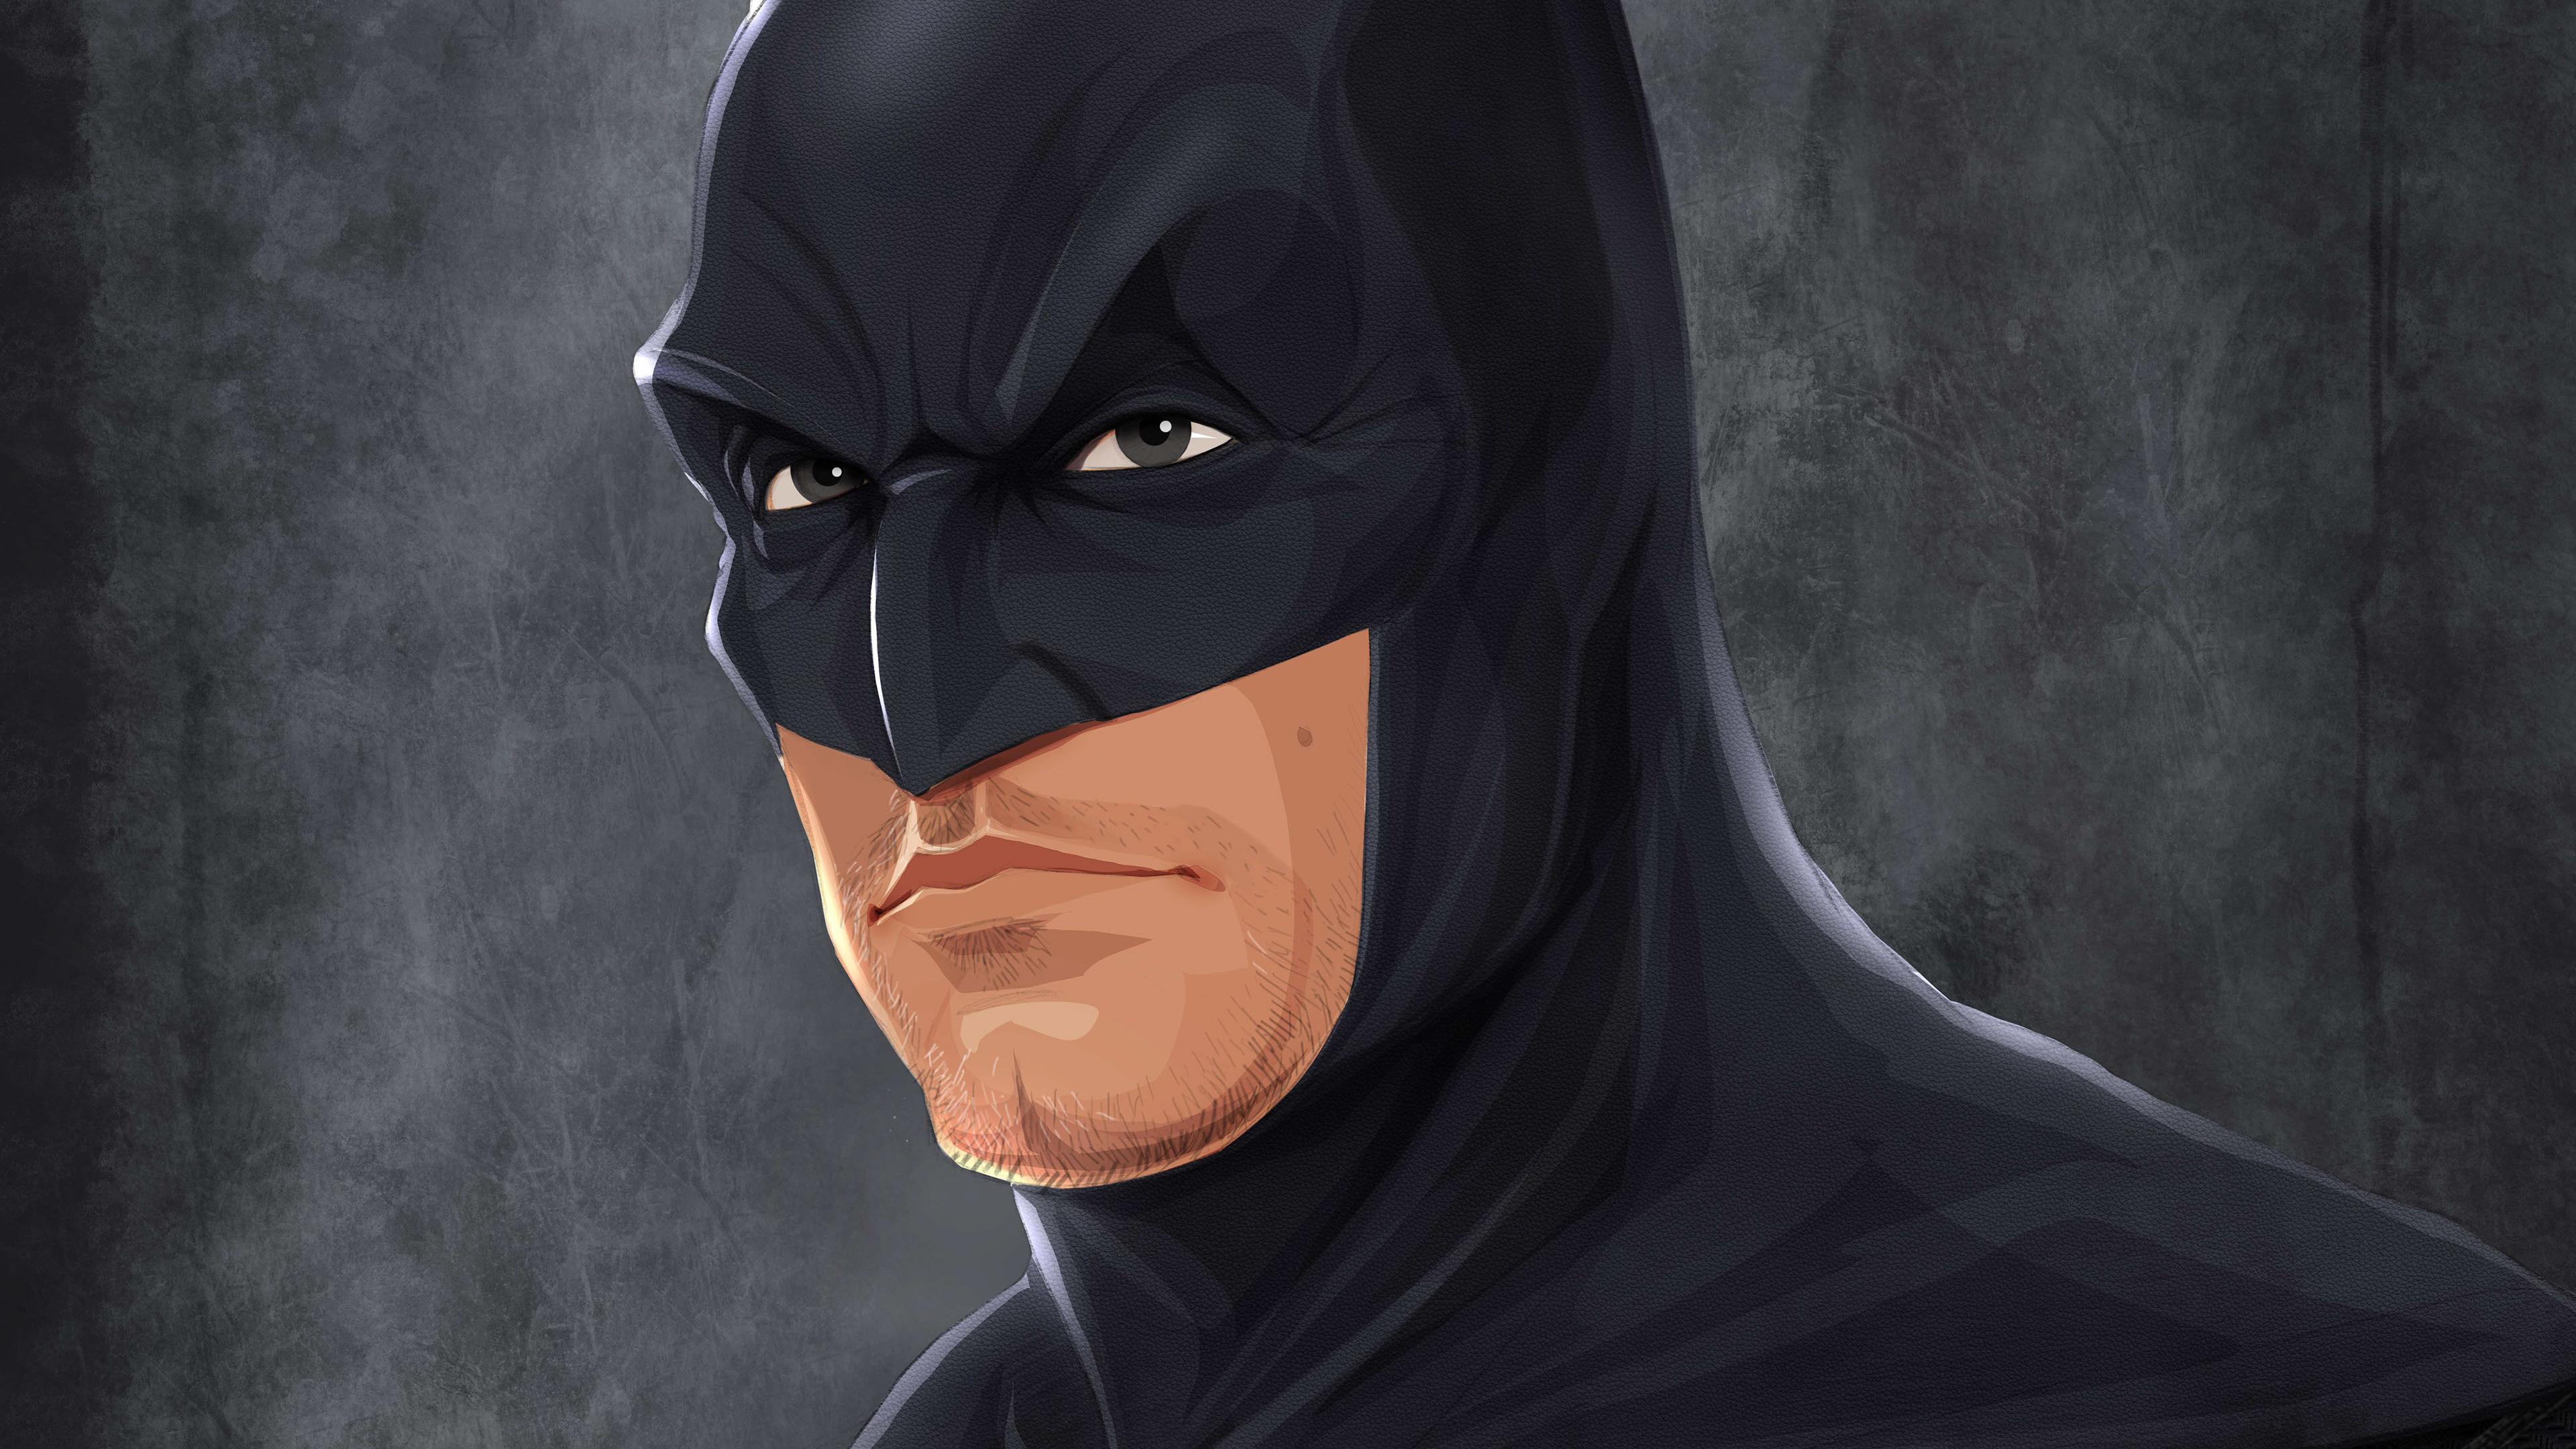 Batman Illustration, HD Superheroes, 4k Wallpaper, Image